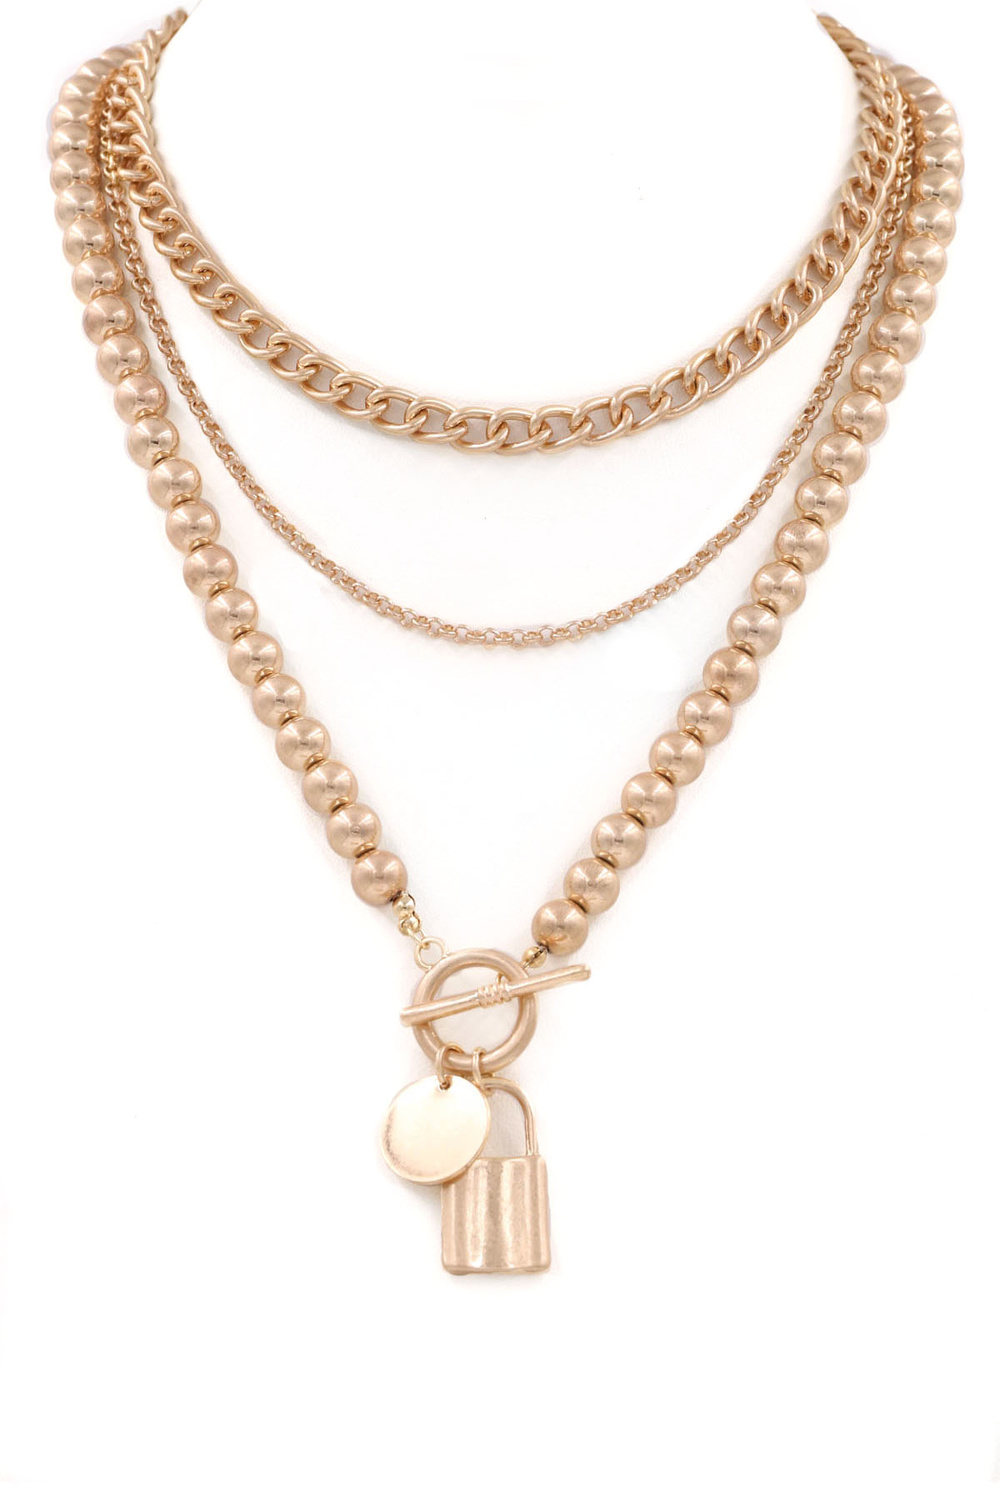 WORN GOLD 3 Piece Chain Necklace - Necklaces